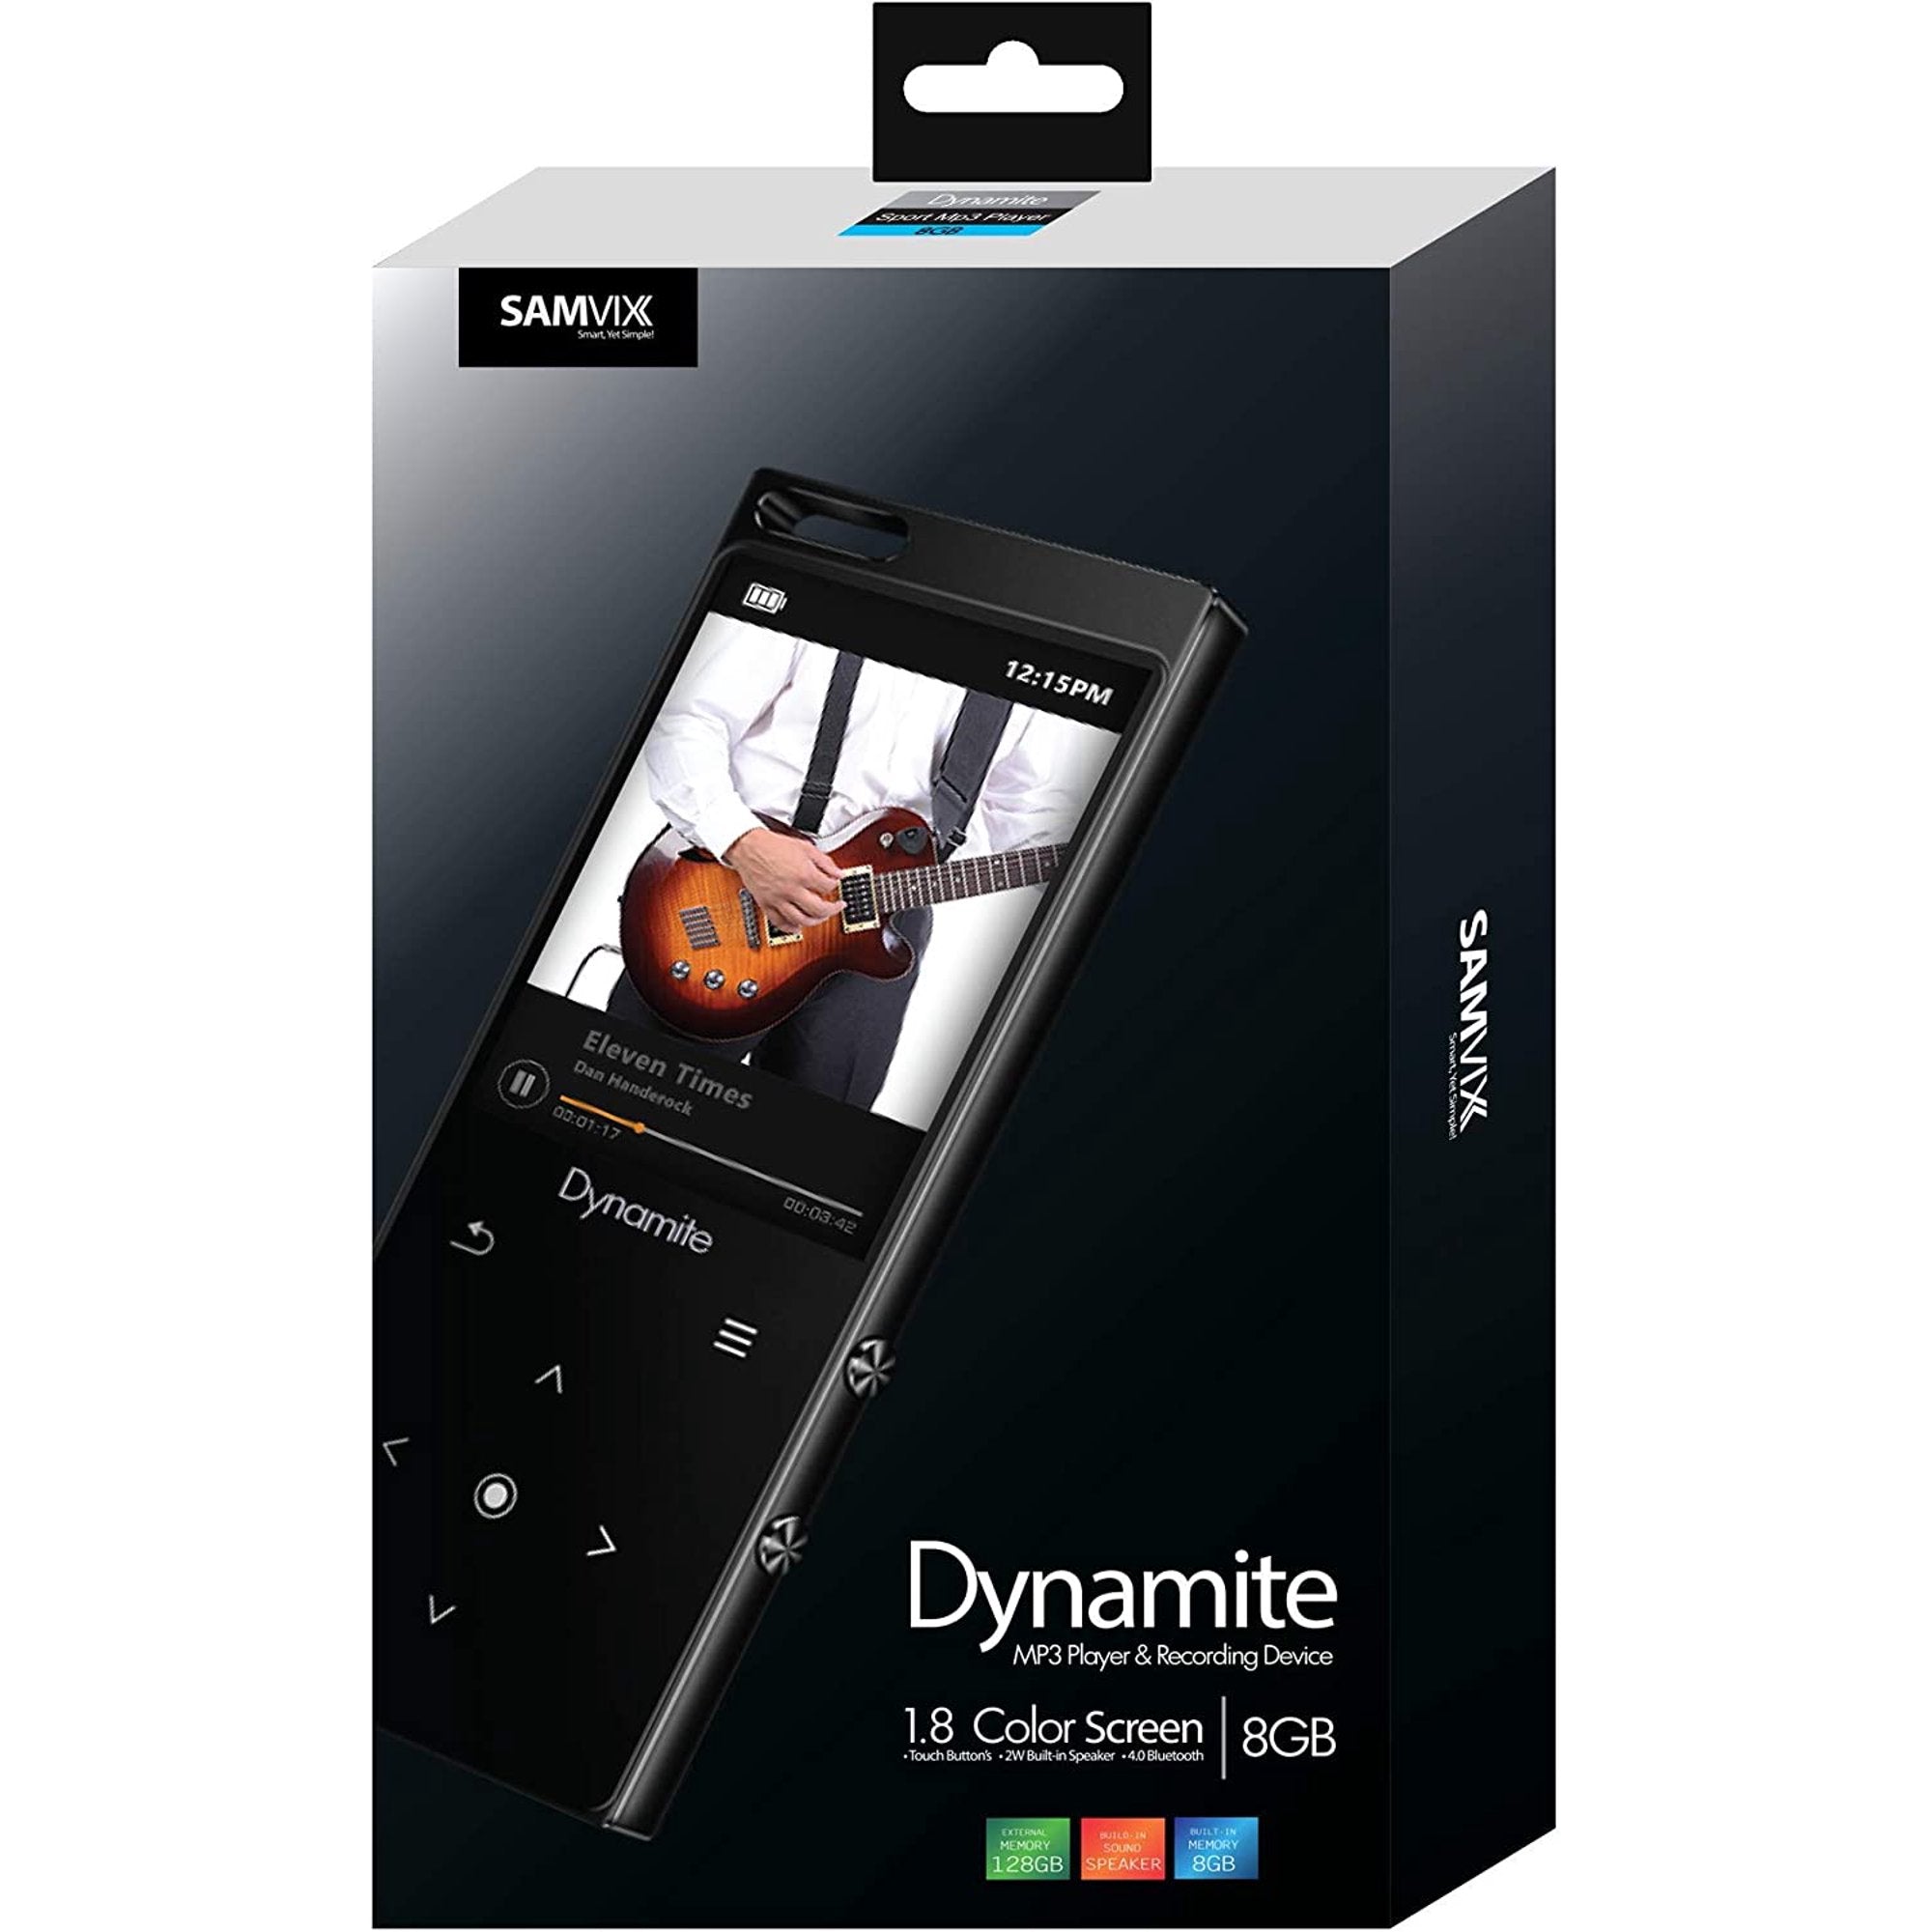 Samvix Dynamite MP3 Player 8GB - Black